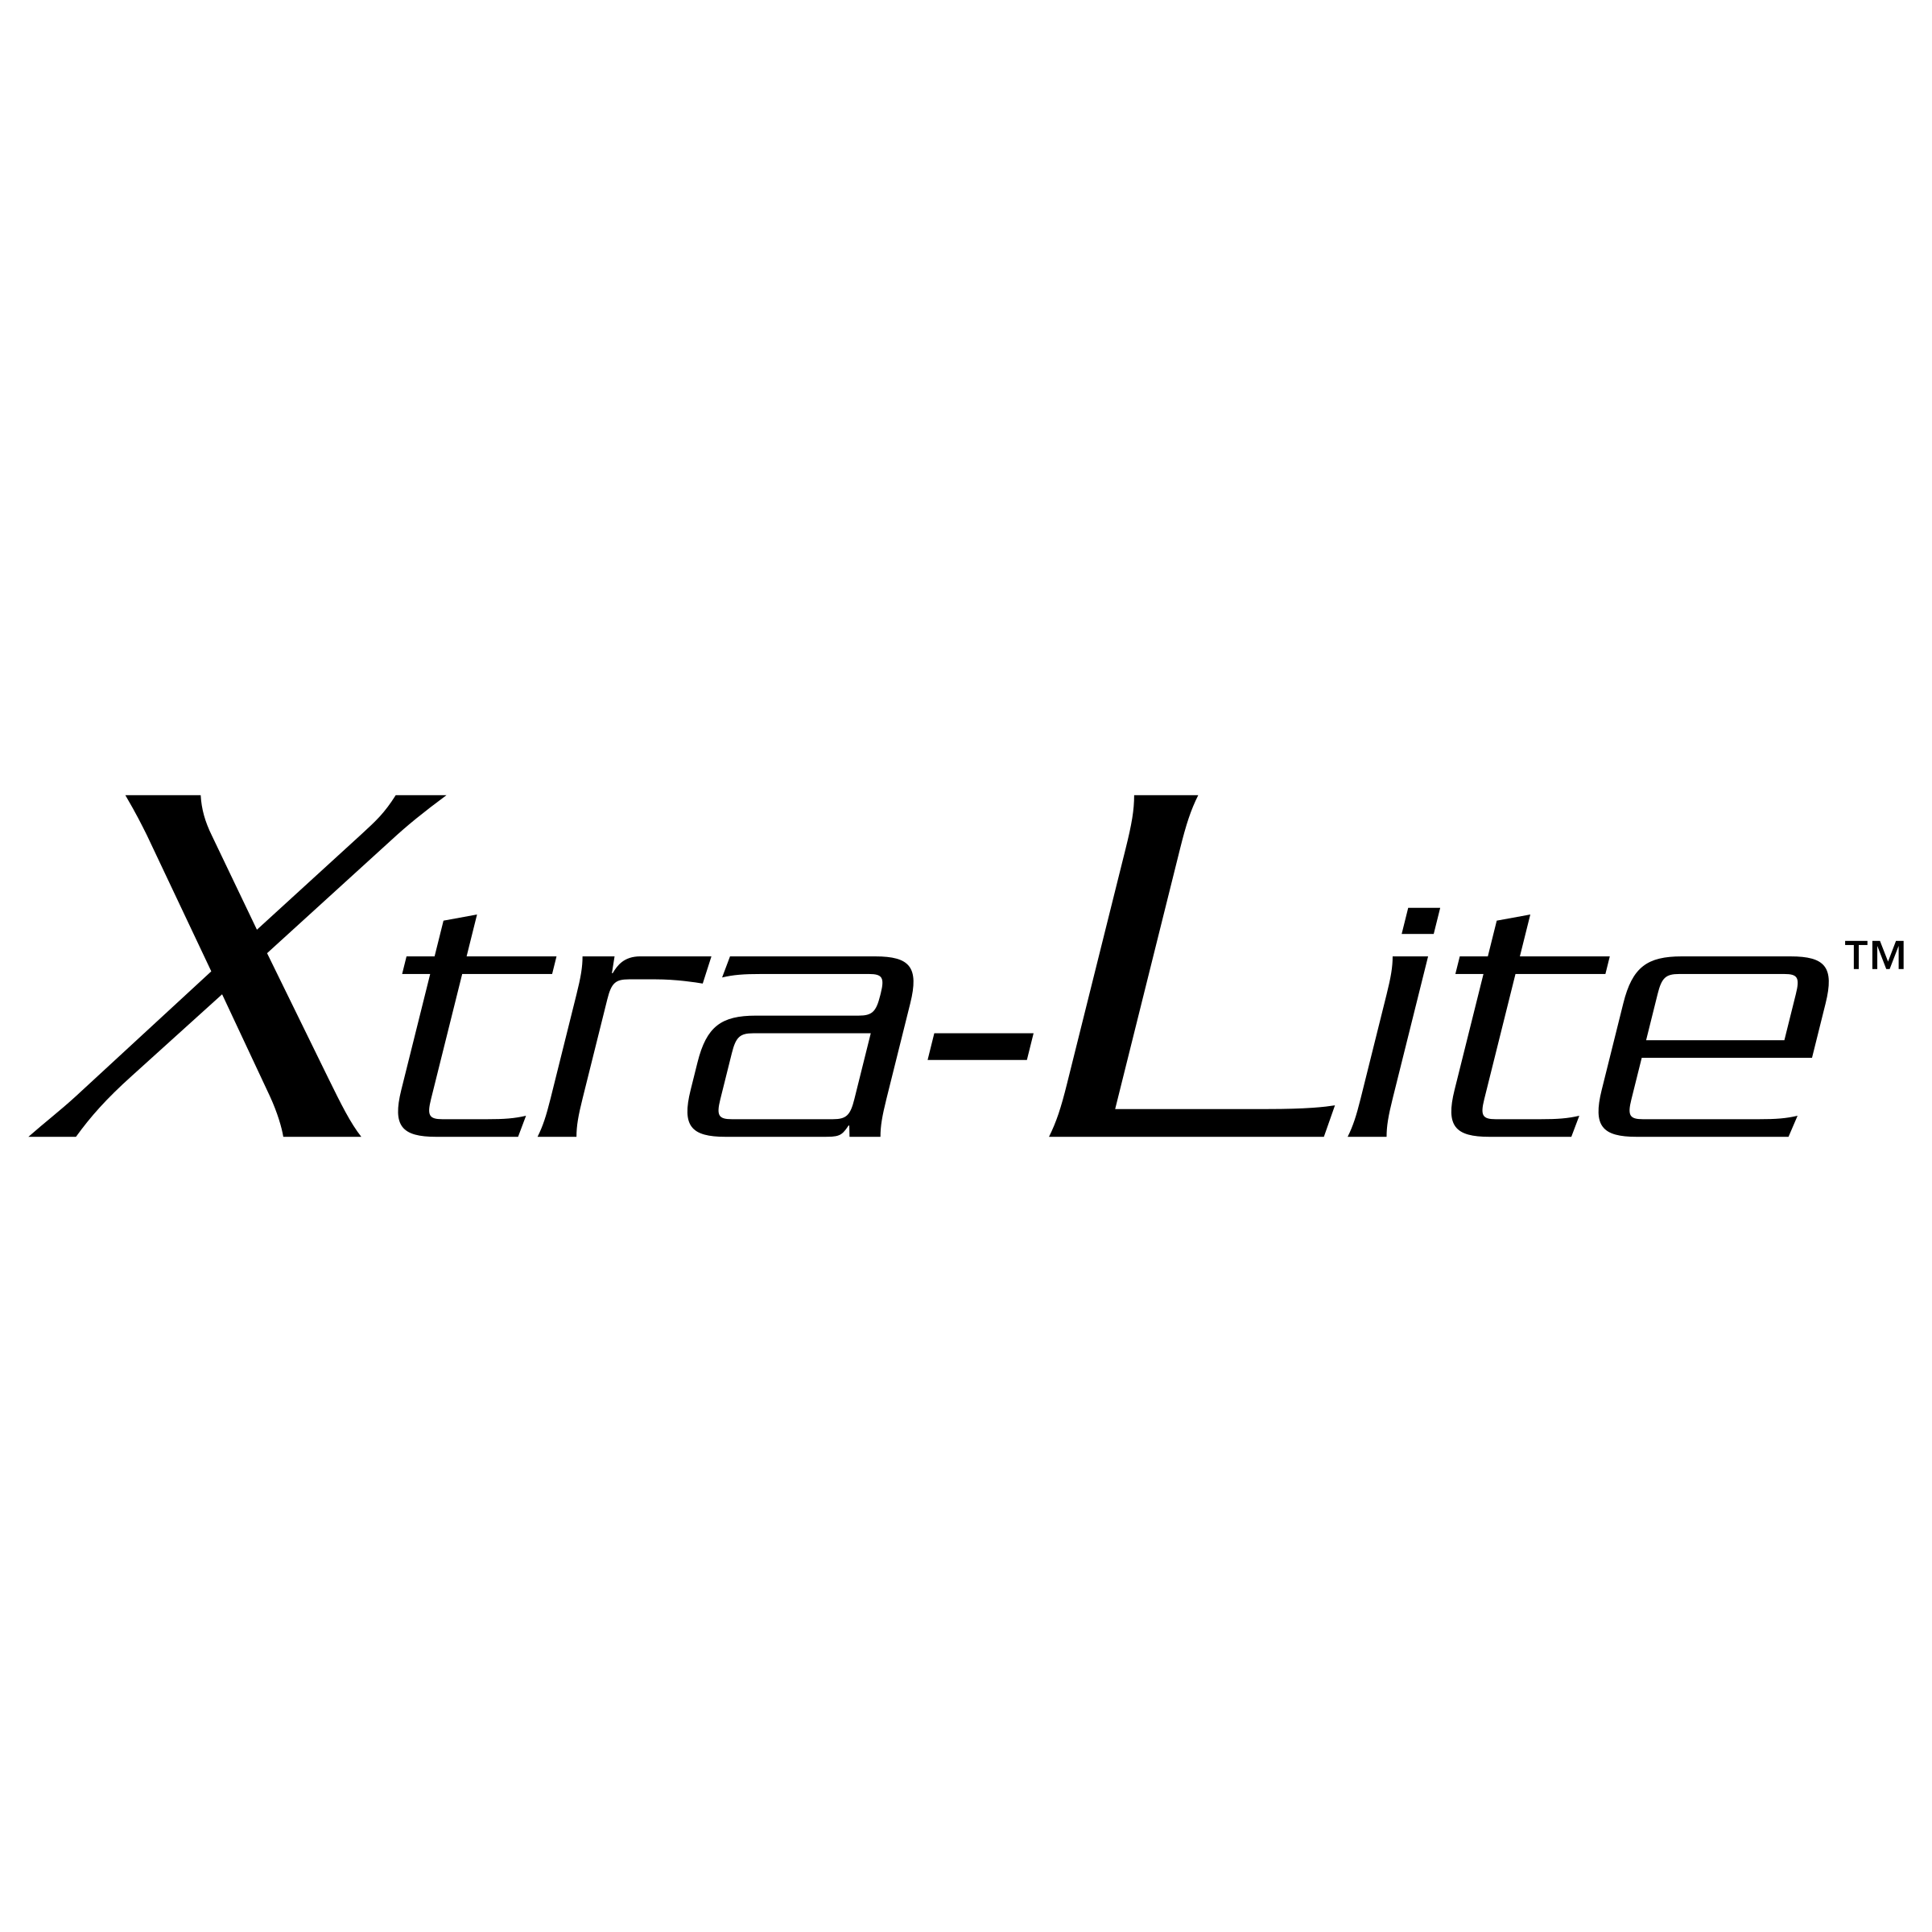 Xenova Logo - Xtra Lite Logo PNG Transparent & SVG Vector